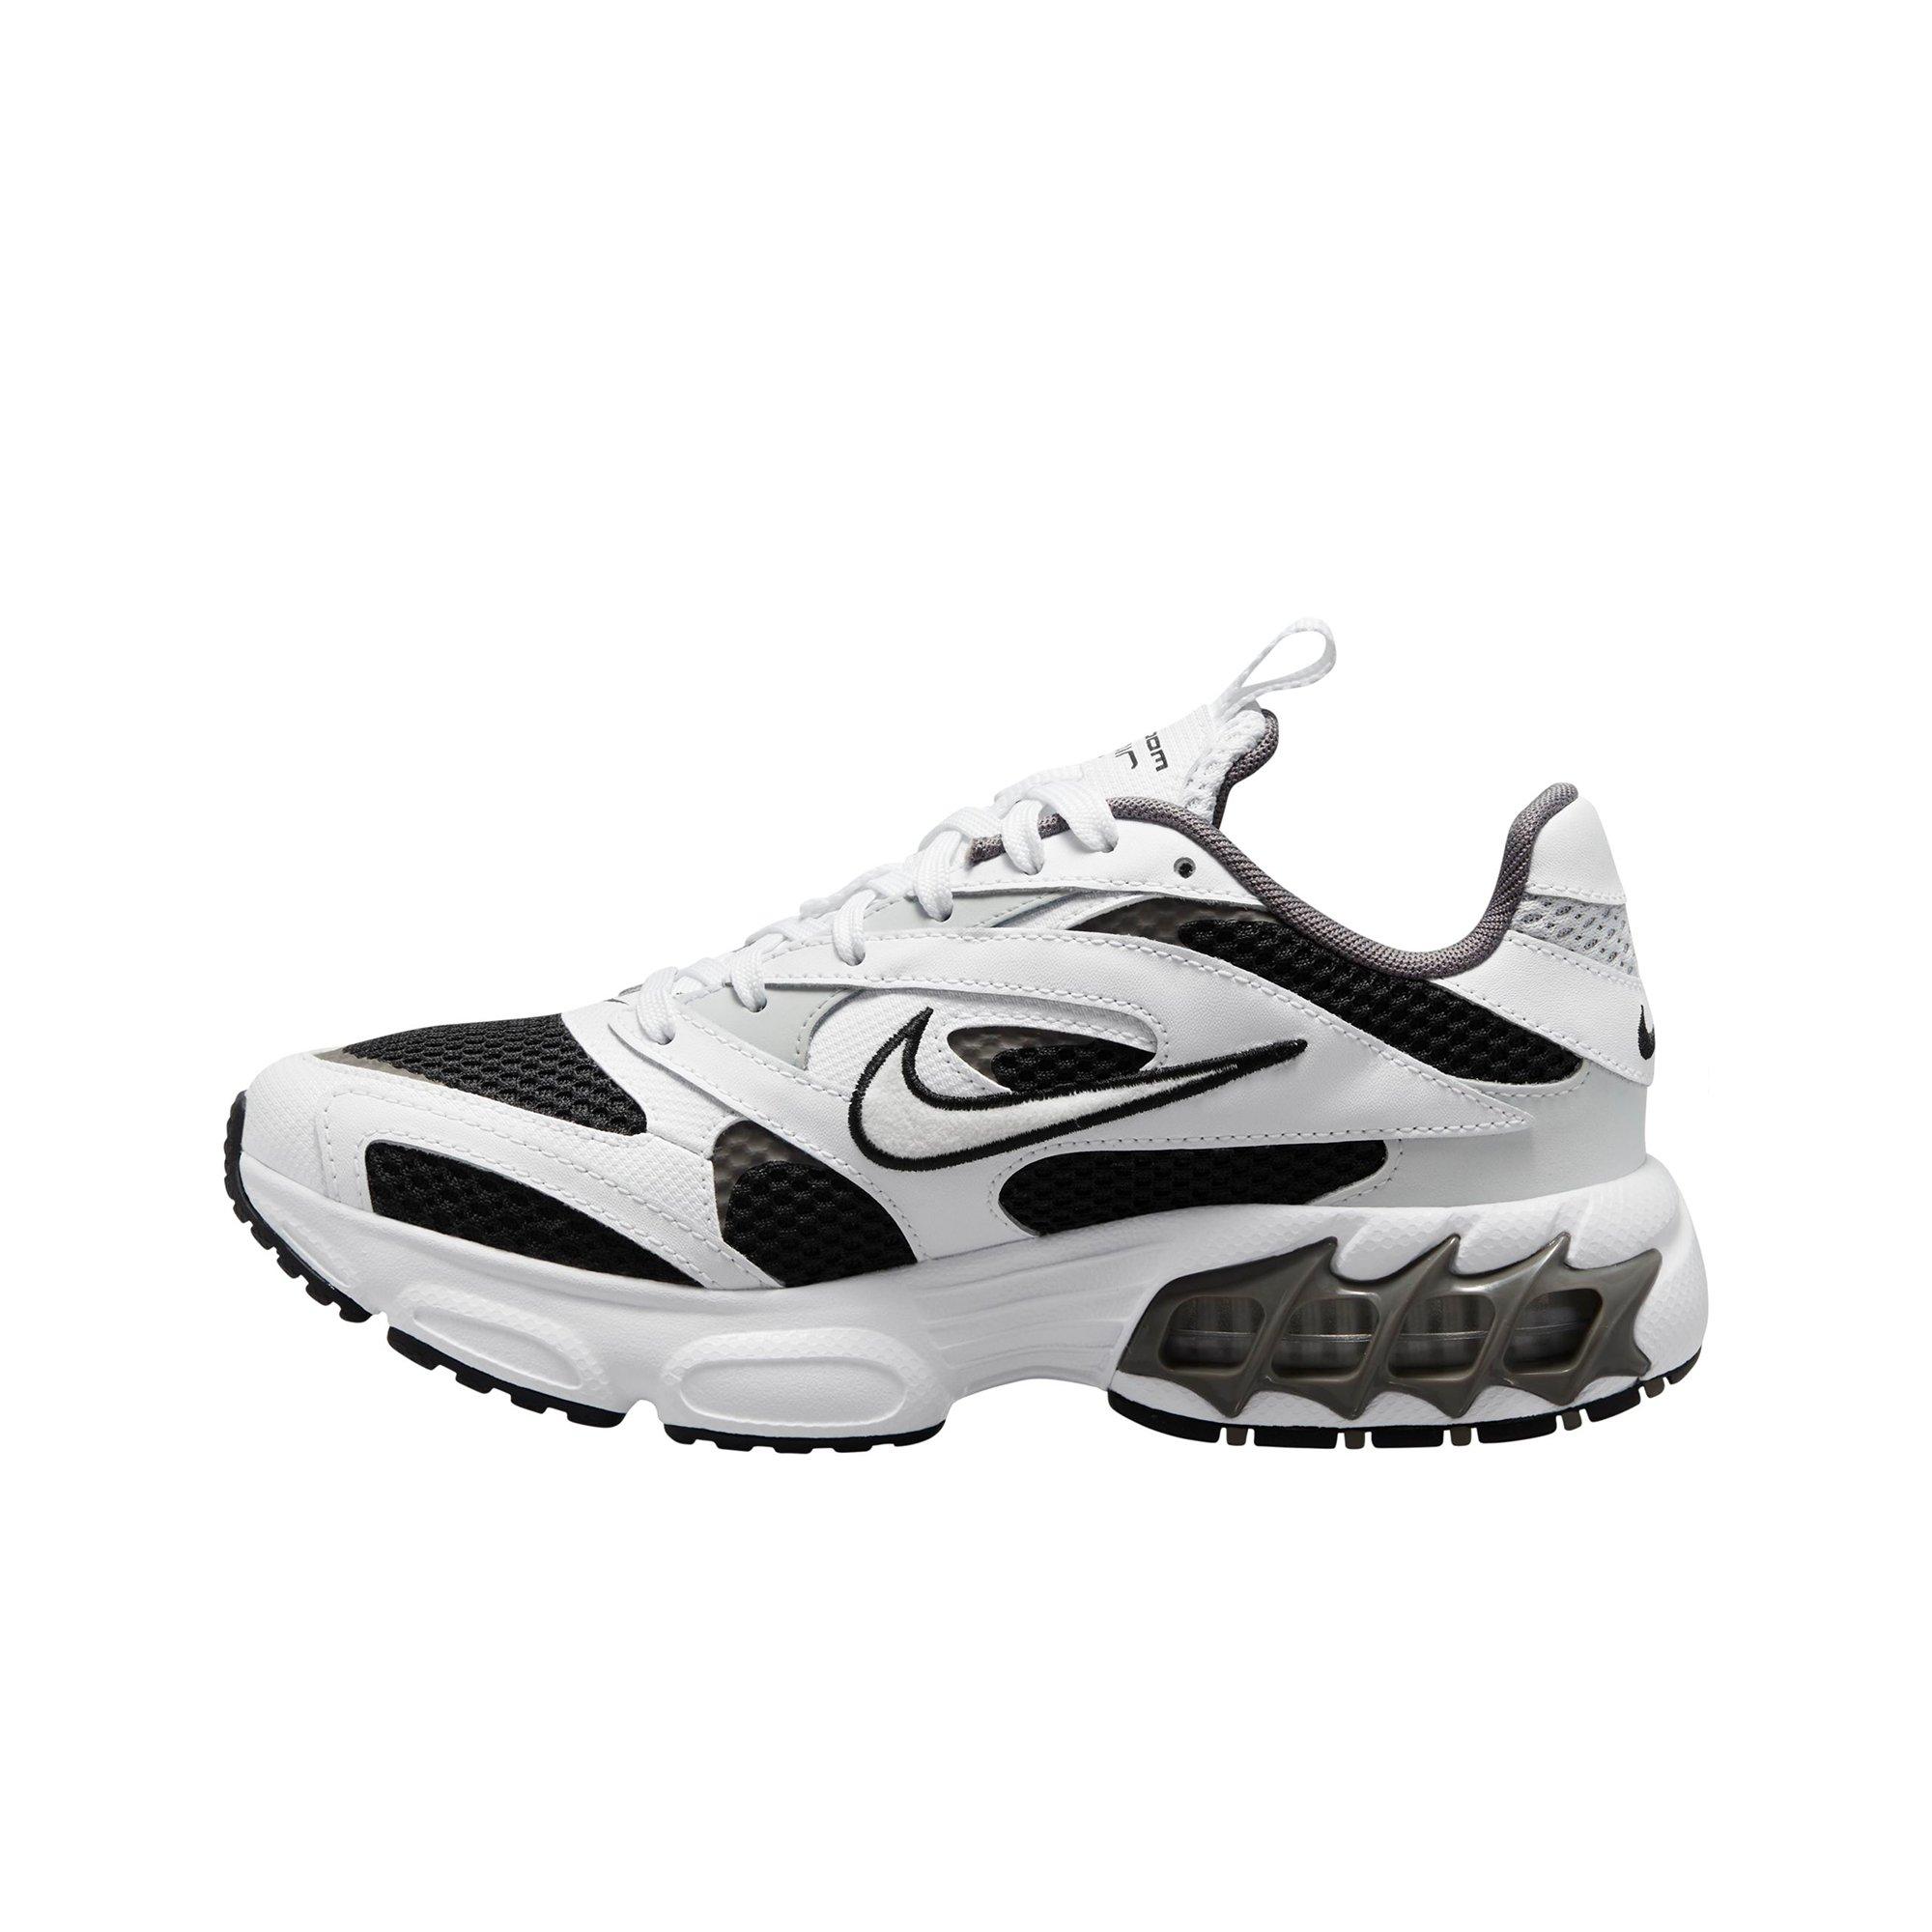 Gering Openbaren breken Nike Zoom Air Fire "Photon Dust/White/Flat Pewter/Black" Women's Shoe